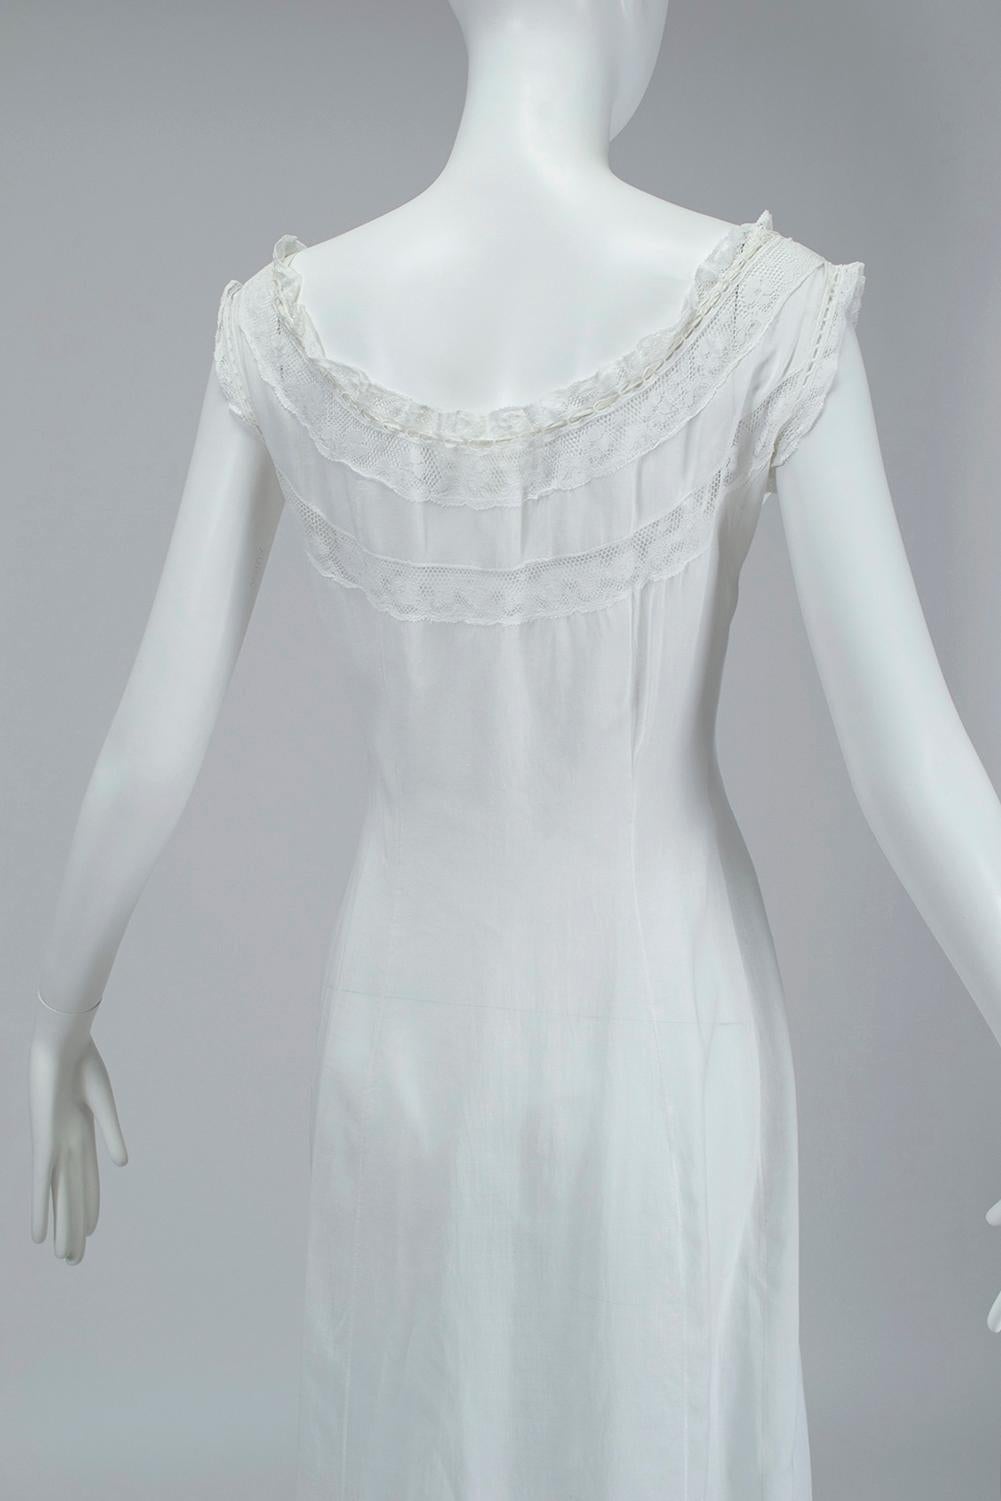 White Edwardian Eyelet and Lace Full Bridal Petticoat Nightgown - XS, 1900s 1